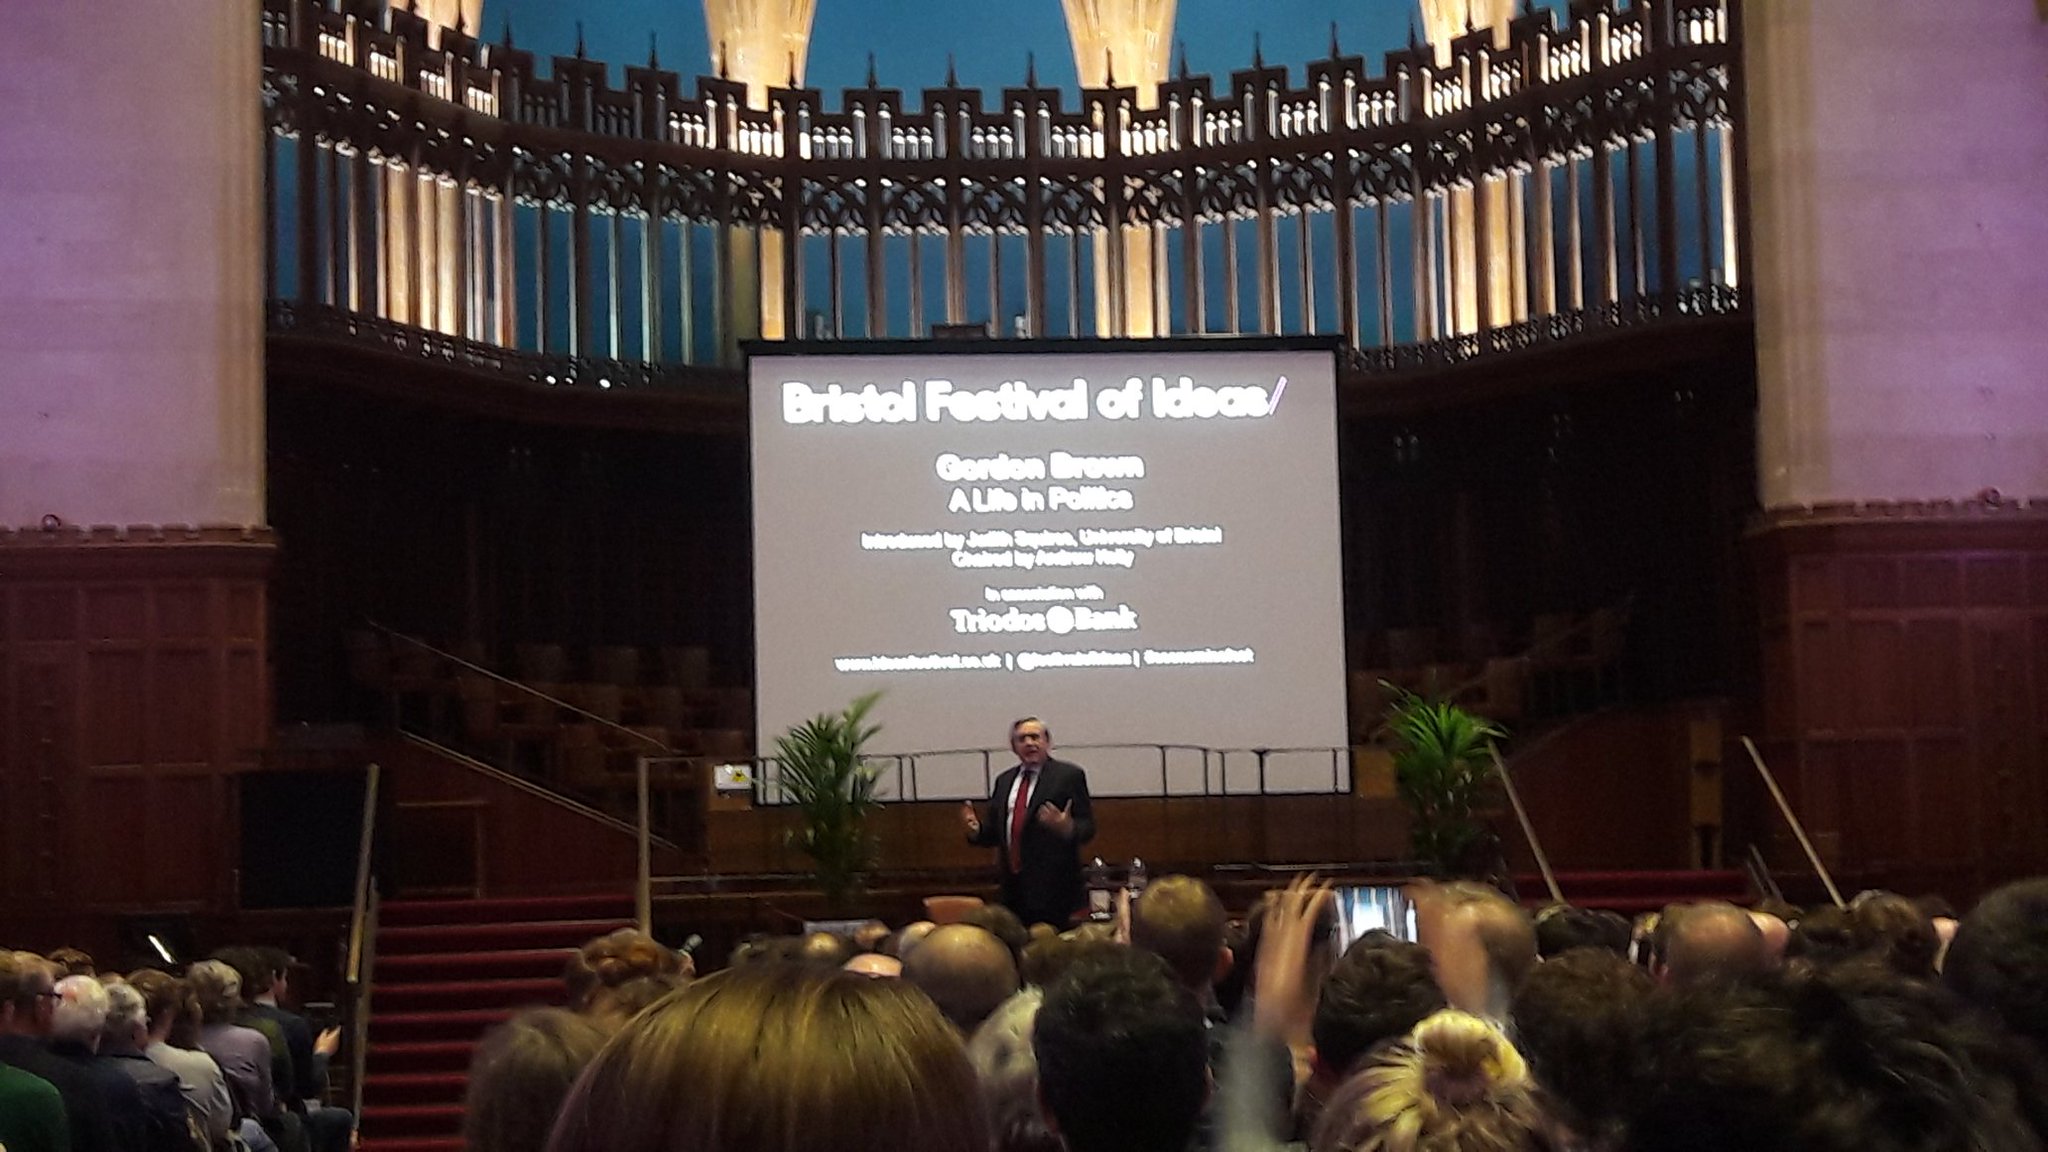 Gordon Brown takes the stage in Bristol to open the #economicsfest to talk on A Life in Politics .@triodosuk @FestivalofIdeas @bw_businesswest @BW_Initiative @BristolUni @UWEBristol https://t.co/UrtaNI8DQ2